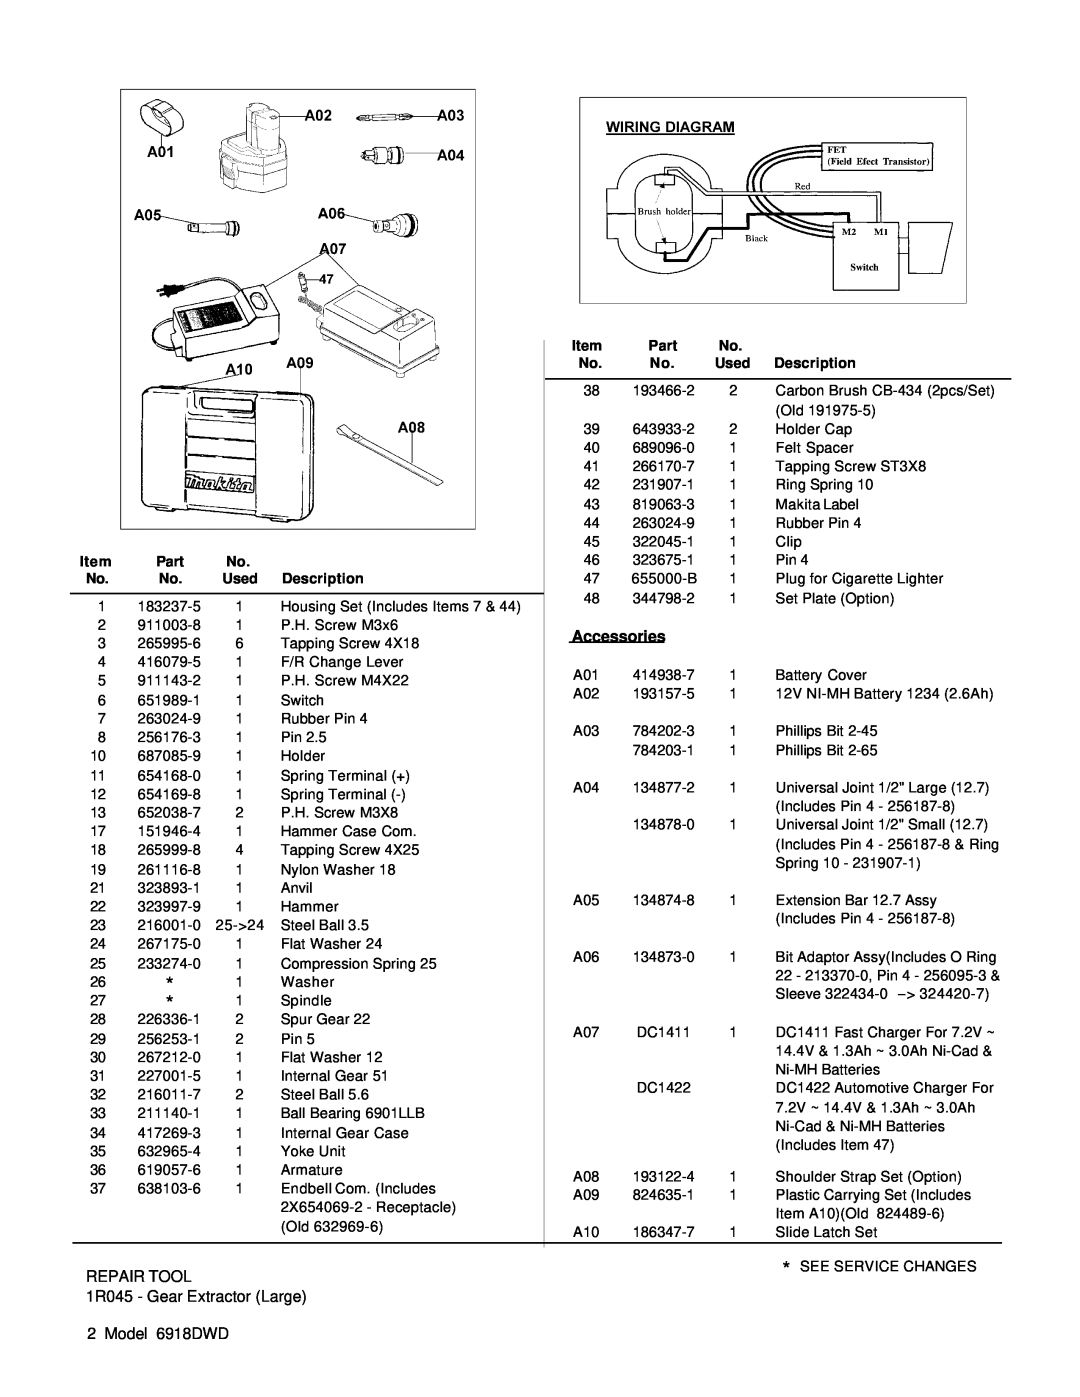 Makita manual Accessories, Repair Tool, 1R045 - Gear Extractor Large 2 Model 6918DWD, Description, Part 